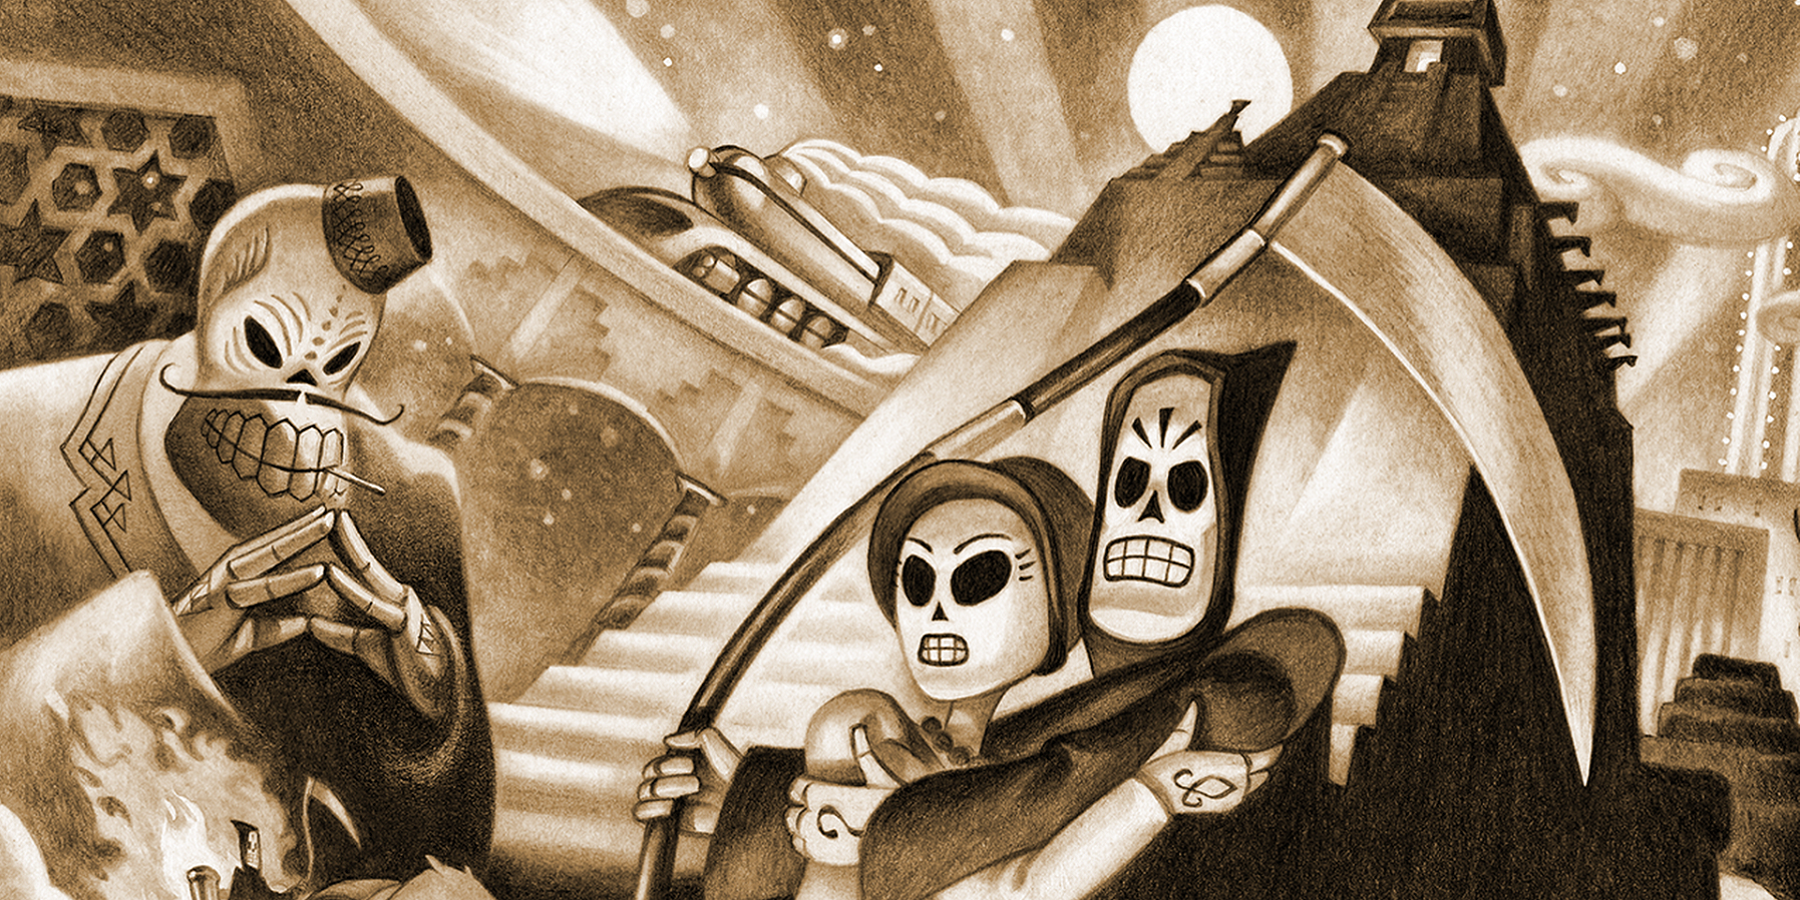 Sepia image showing Grim Fandango by LucasArts.